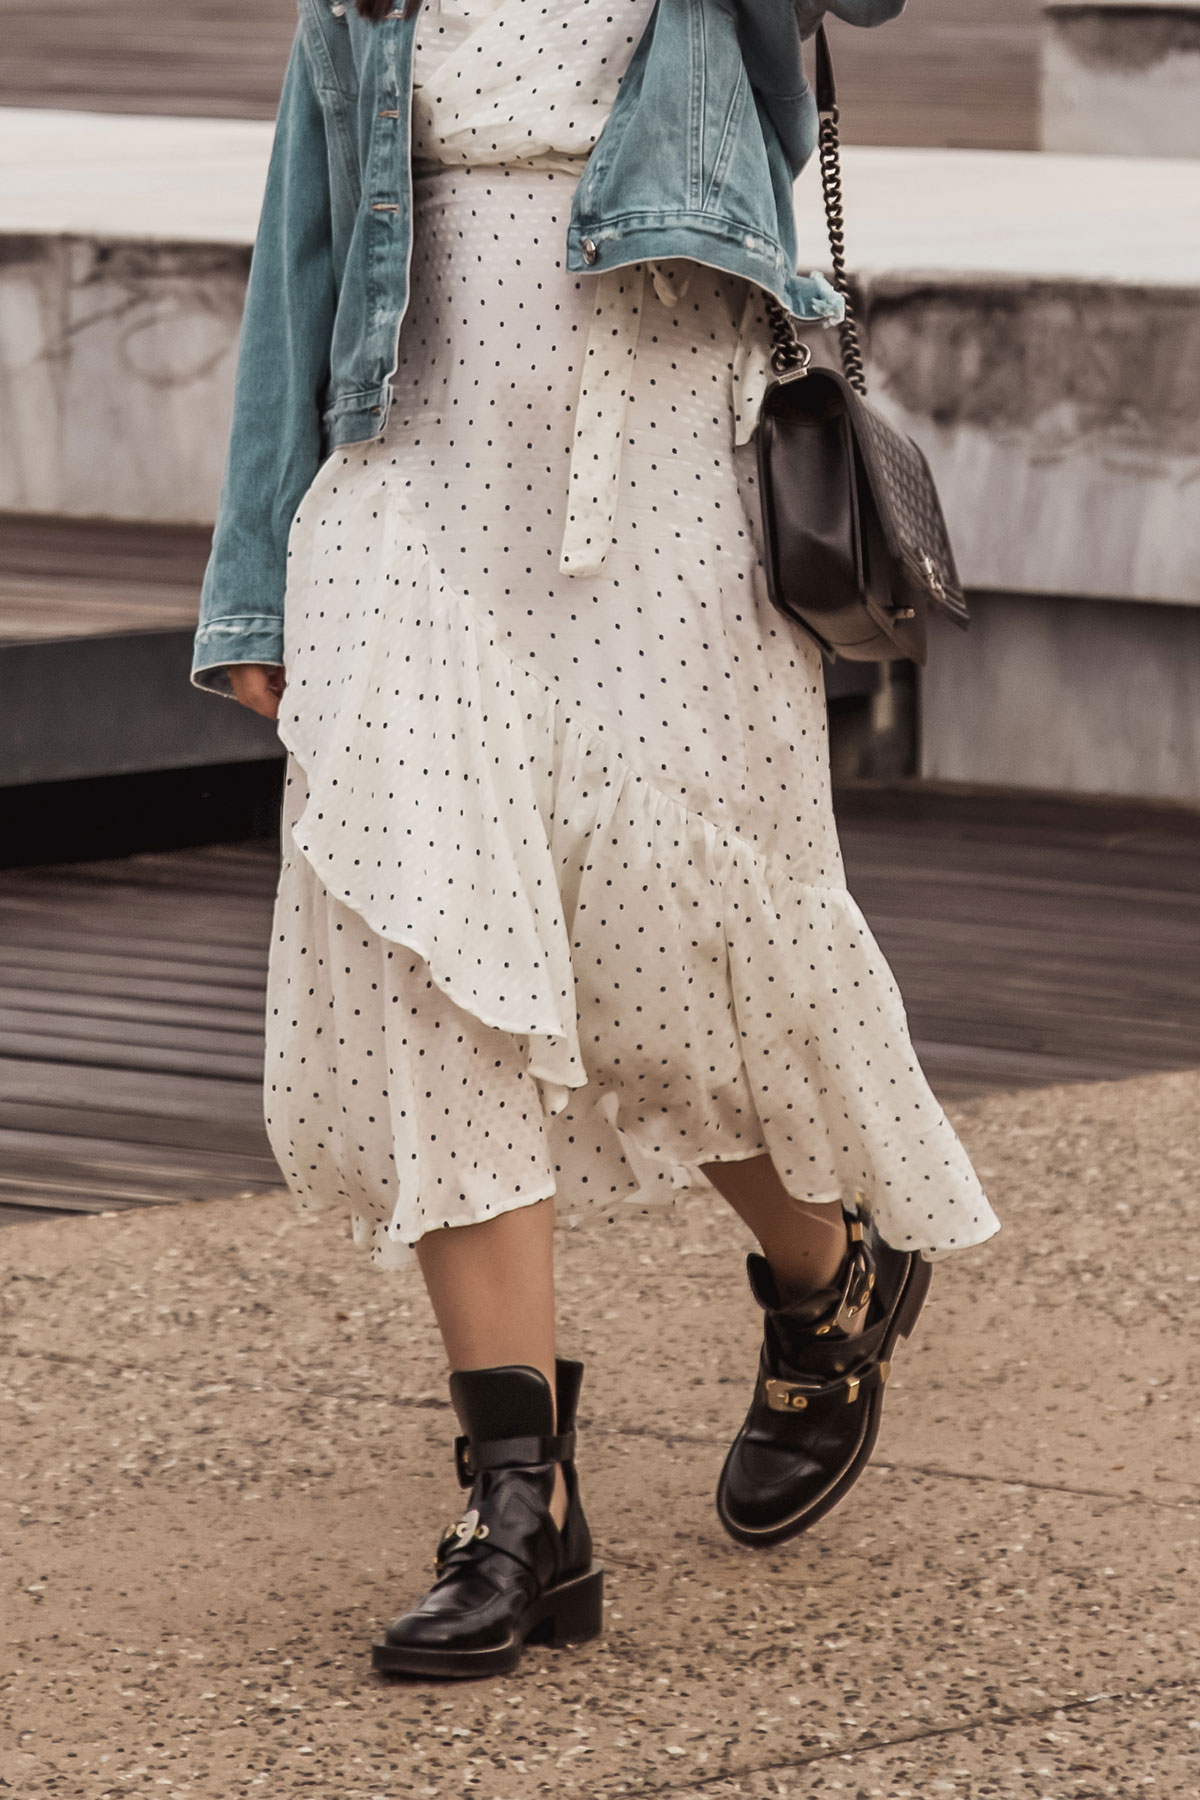 Stella Asteria wearing white polka dot dress with edgy black boots, denim jacket & Chanel boy bag - Spring/Summer 2018 fashion style inspiration